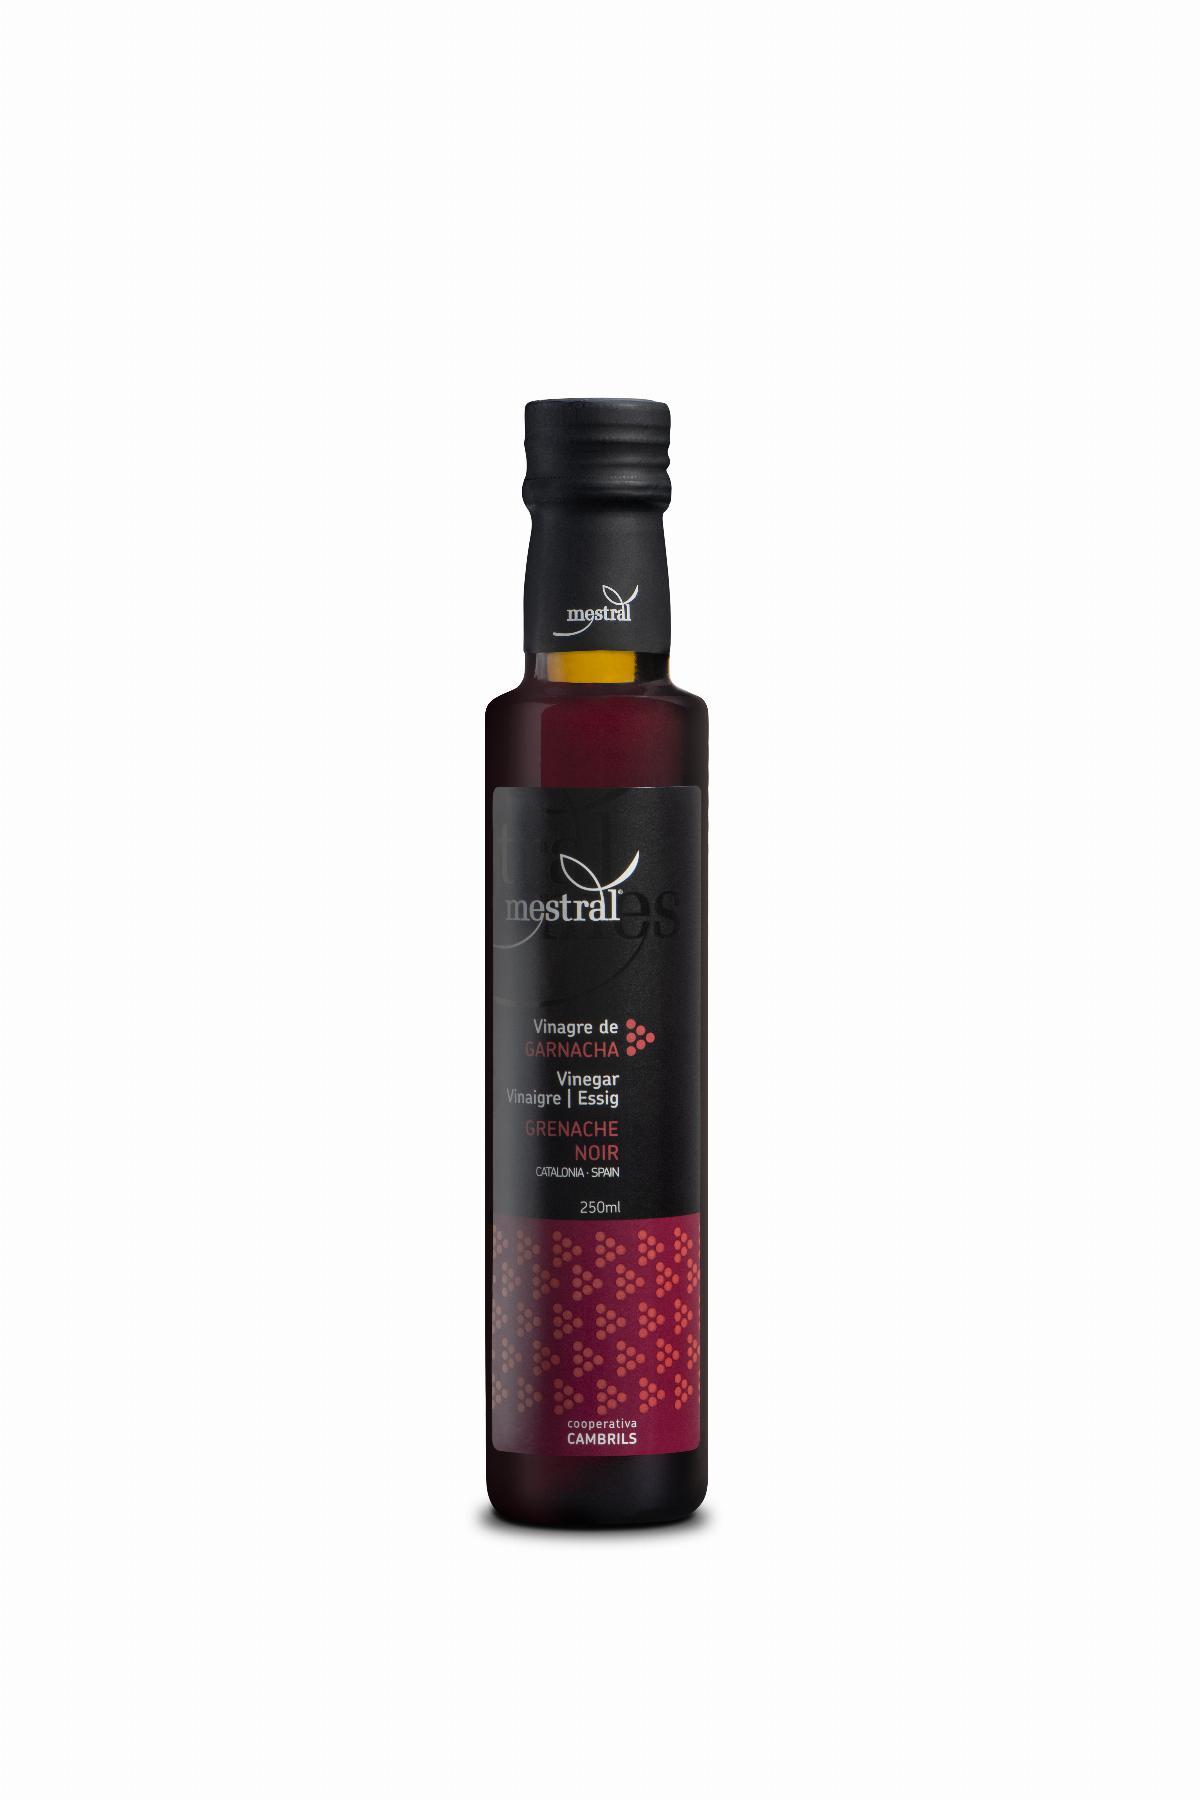 Vinaigre - Vinagre de Garnatxa negre Mestral, ampolla dòrica fosca 500ml, ES-EN-DE - Mestral Cambrils